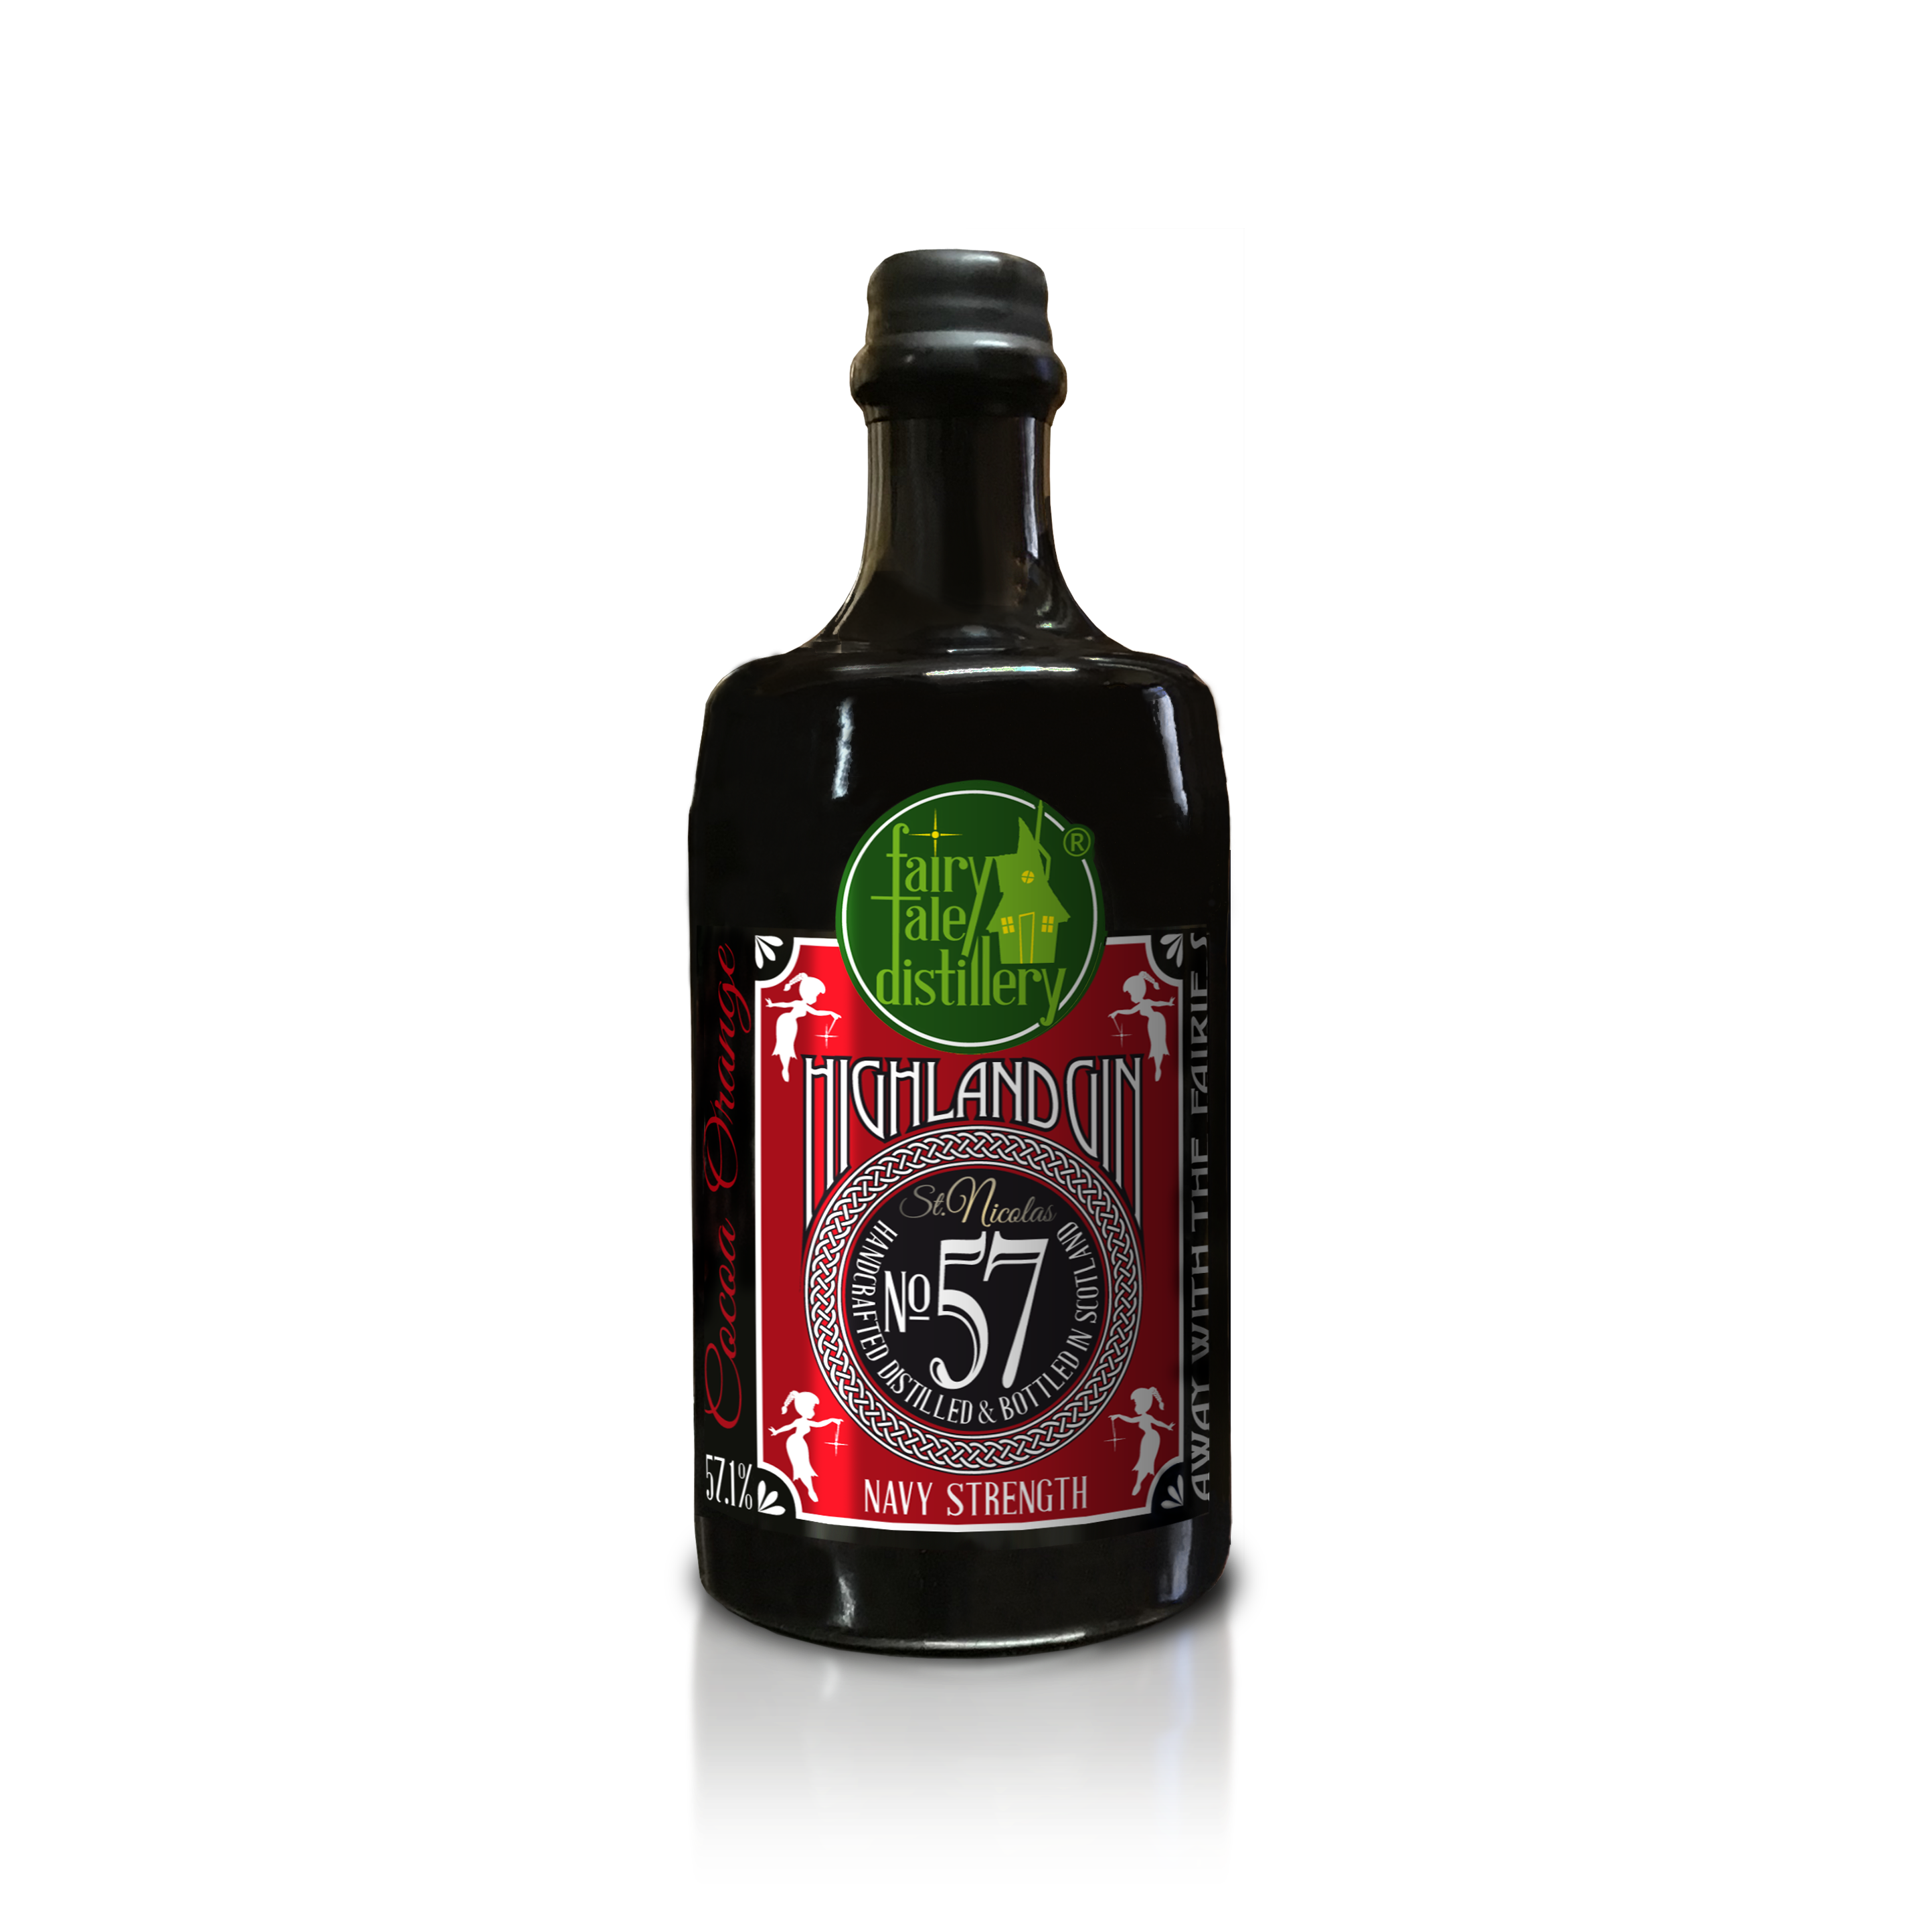 No 57 St. Nicolas Navy Strength Highland Gin bottle 0,7l from Fairytale Distillery